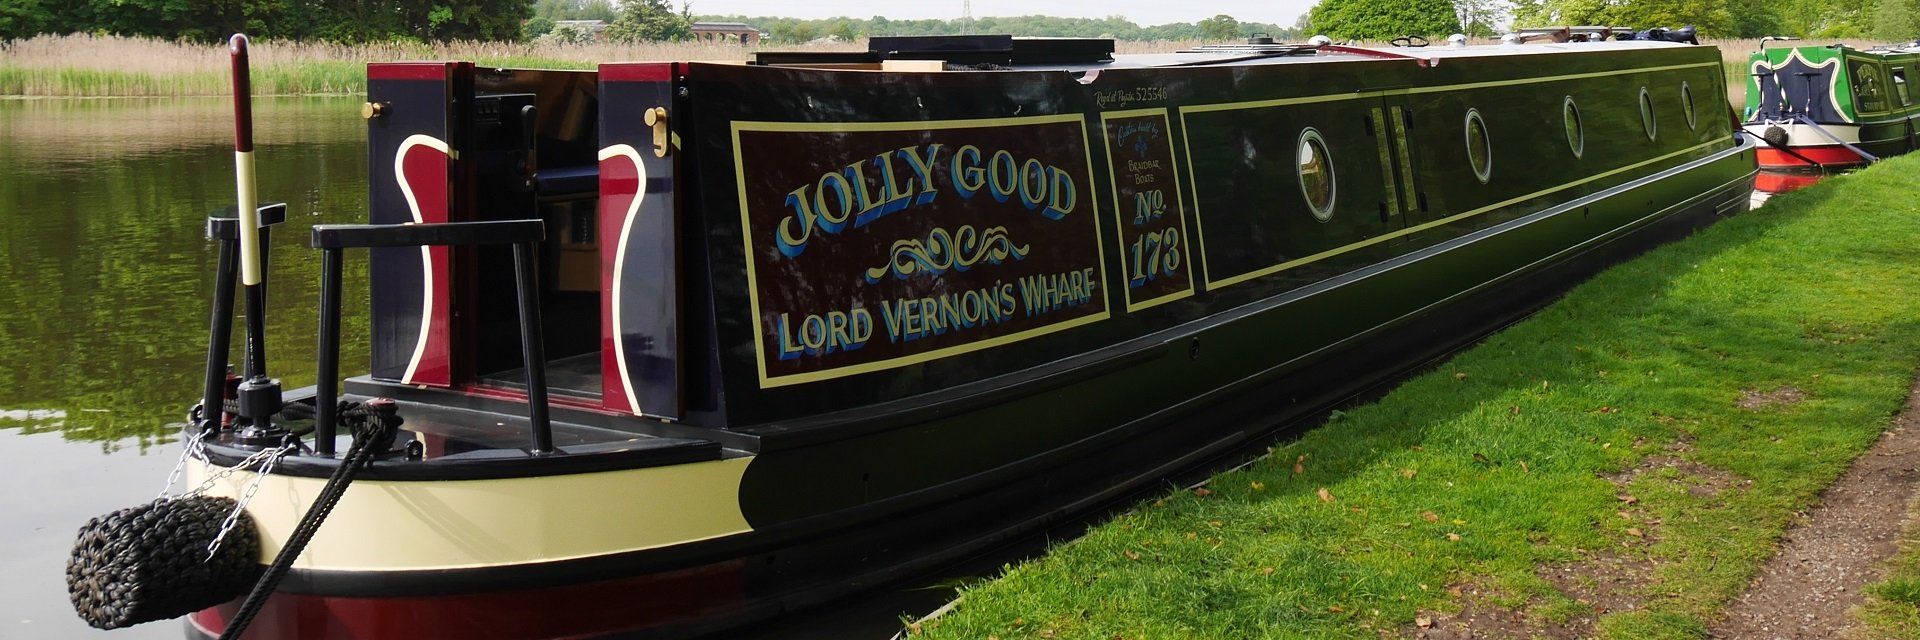 Narrowboat Jolly Good